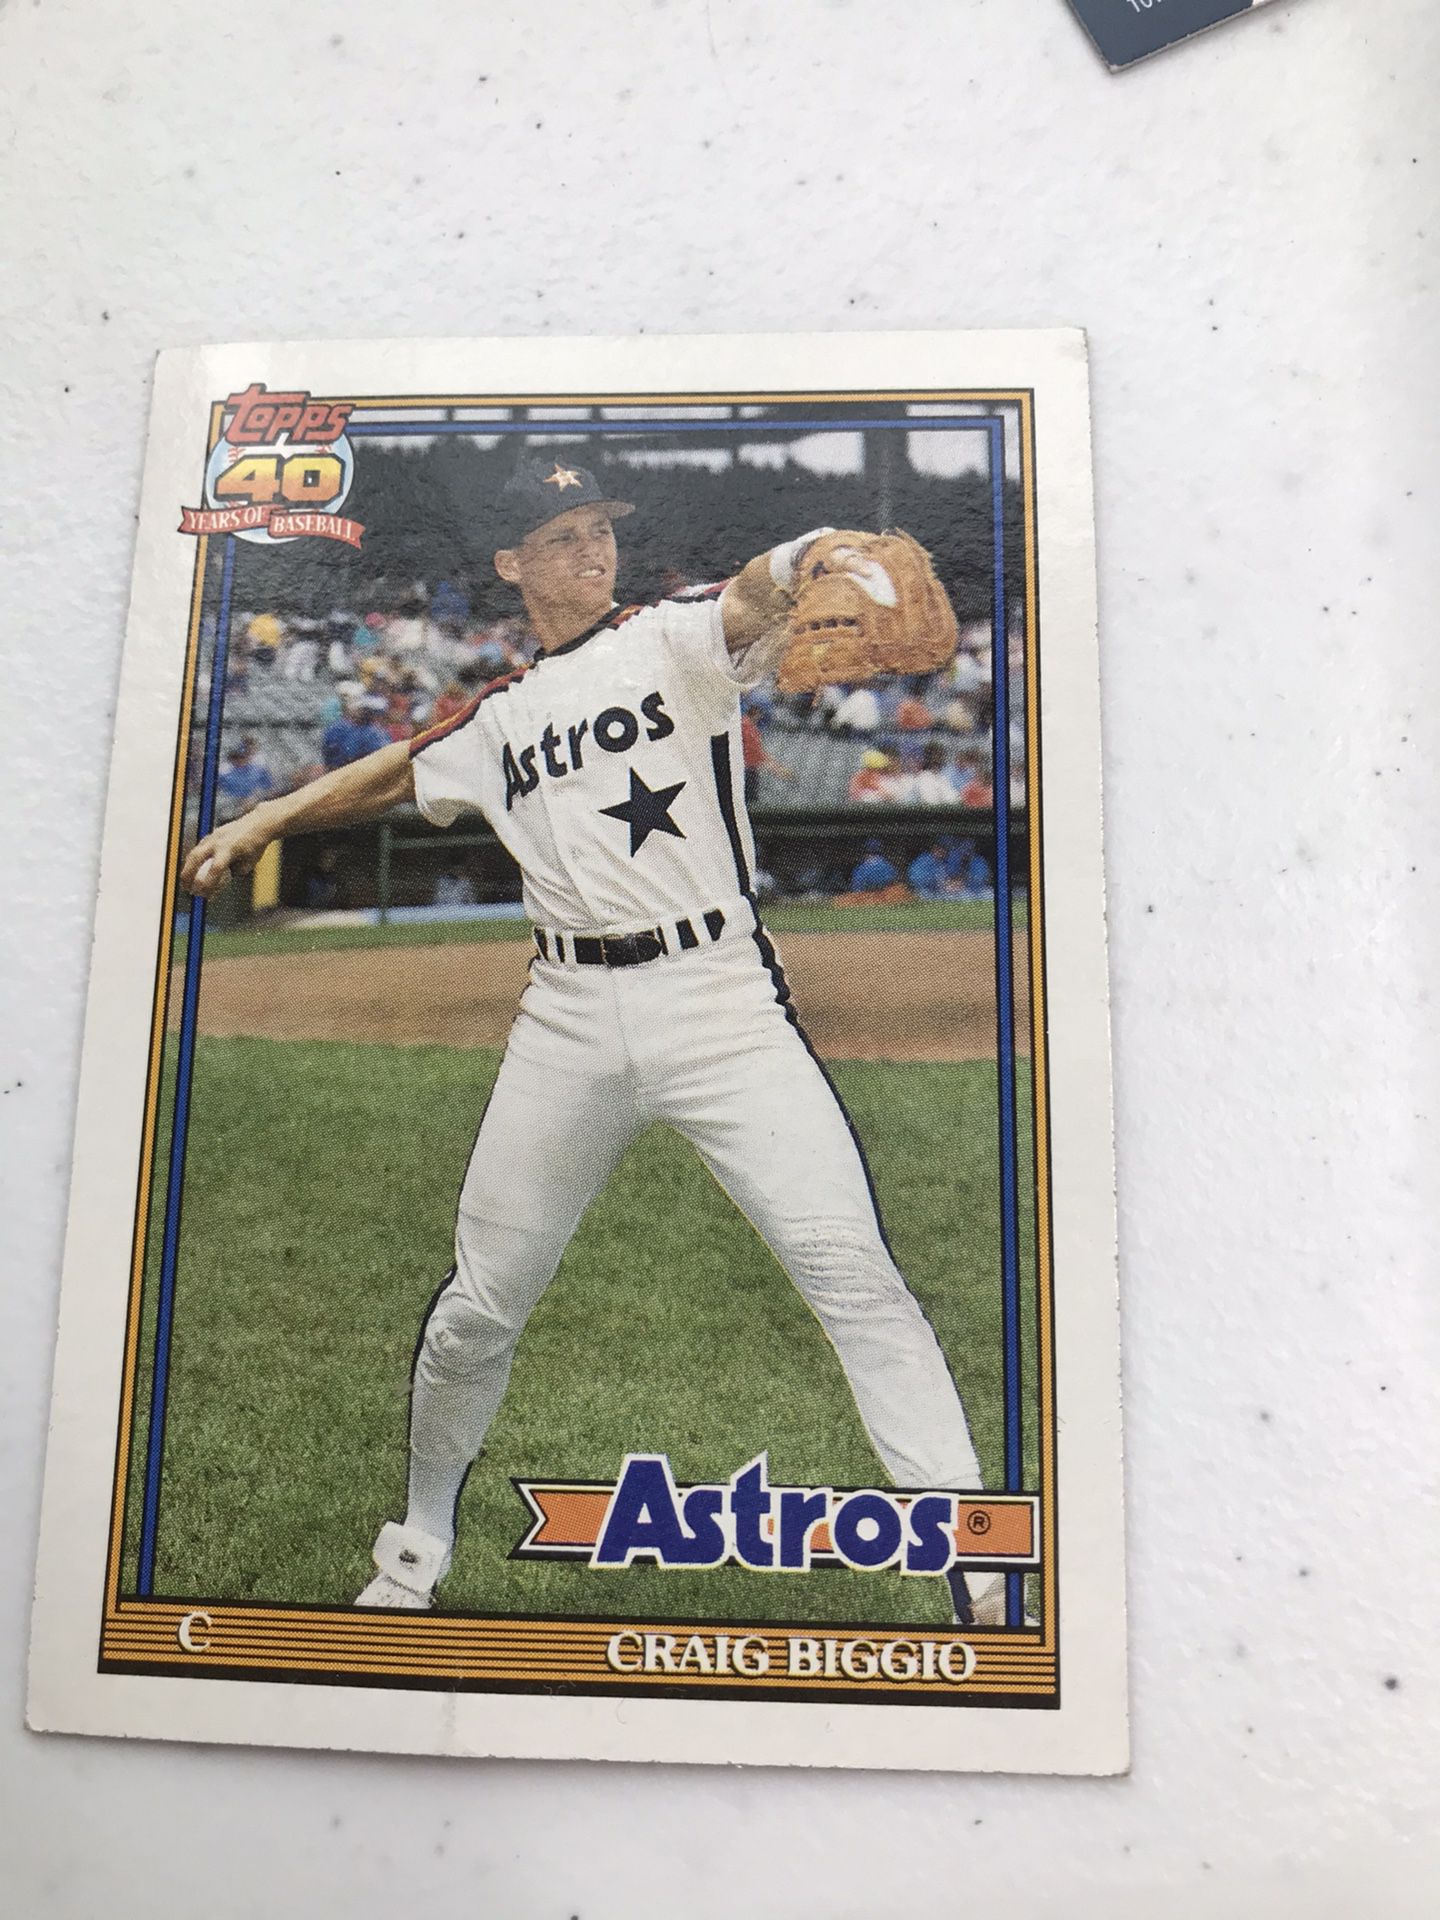 1991 Craig Biggio Topps baseball card